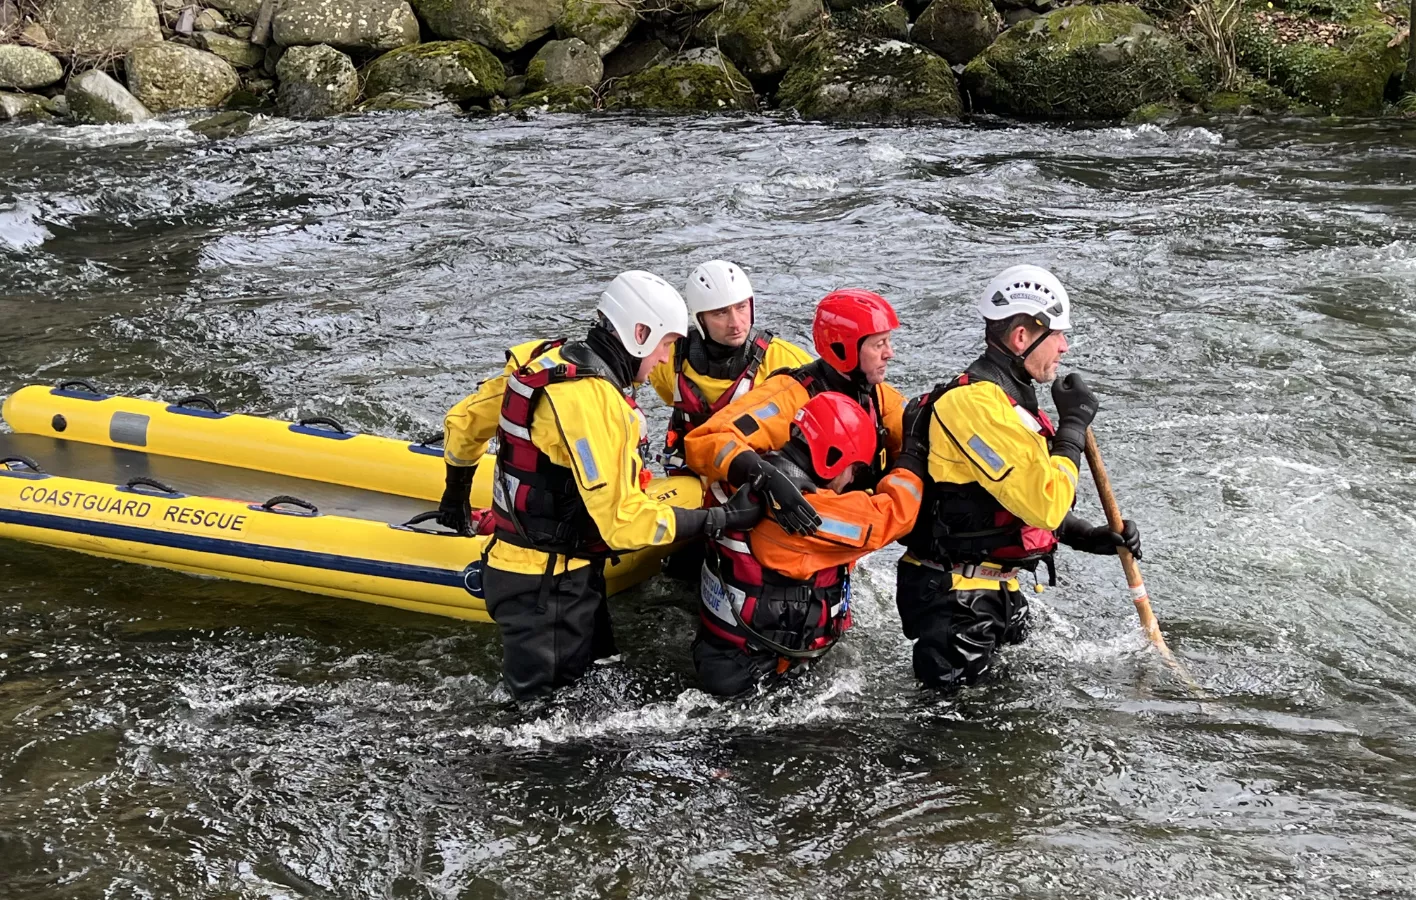 Coastguard doing river rescue